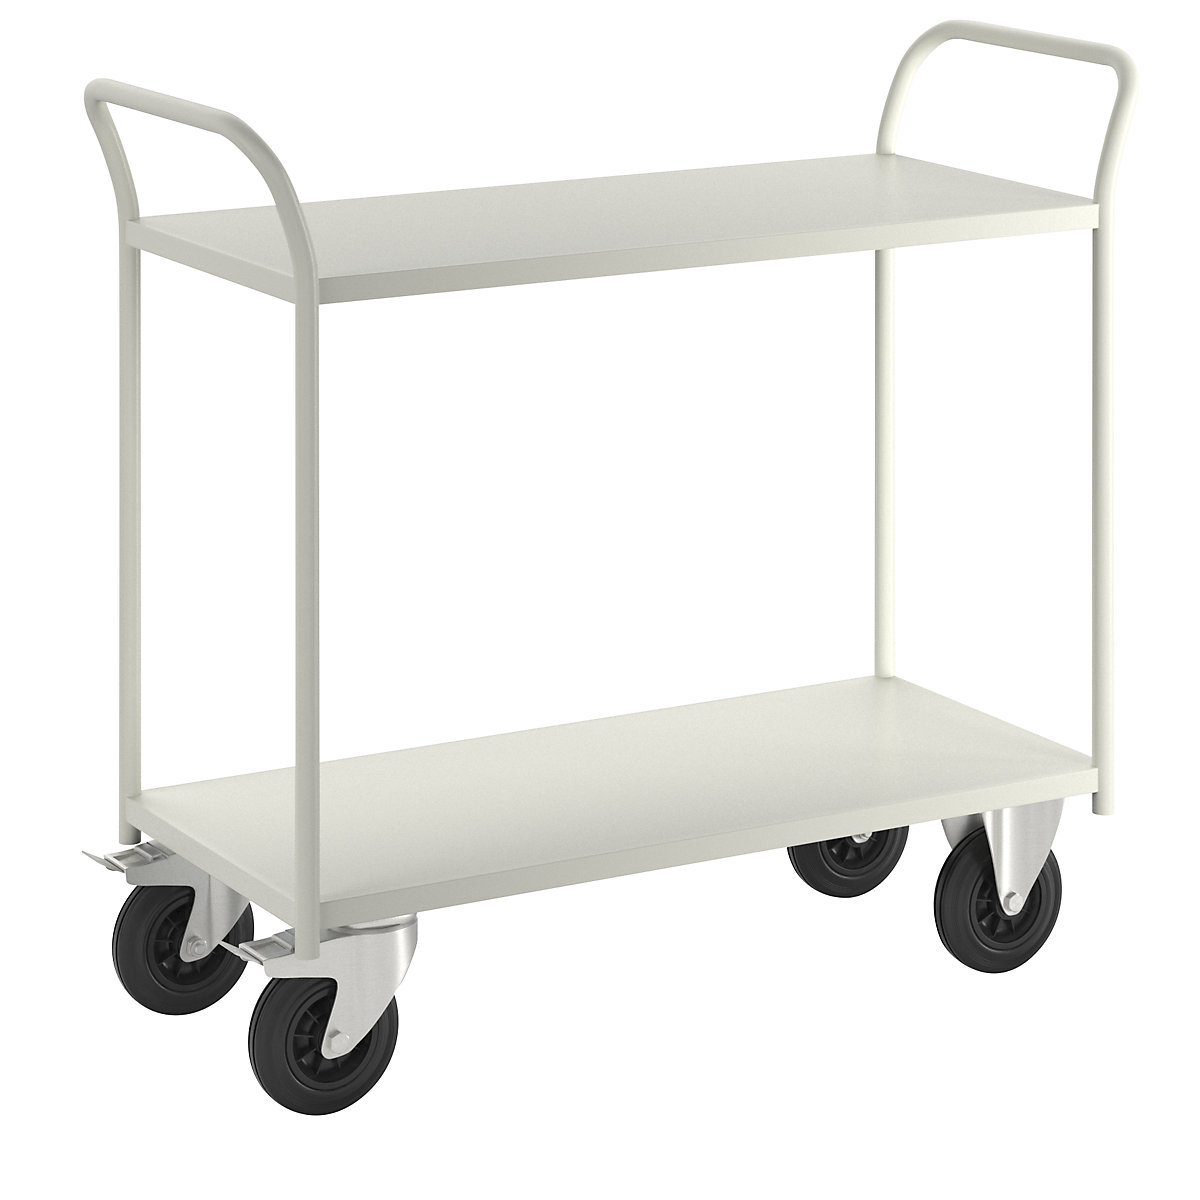 KM41 table trolley – Kongamek, 2 shelves, LxWxH 1080 x 450 x 975 mm, white, 2 swivel castors with stops, 2 fixed castors-2